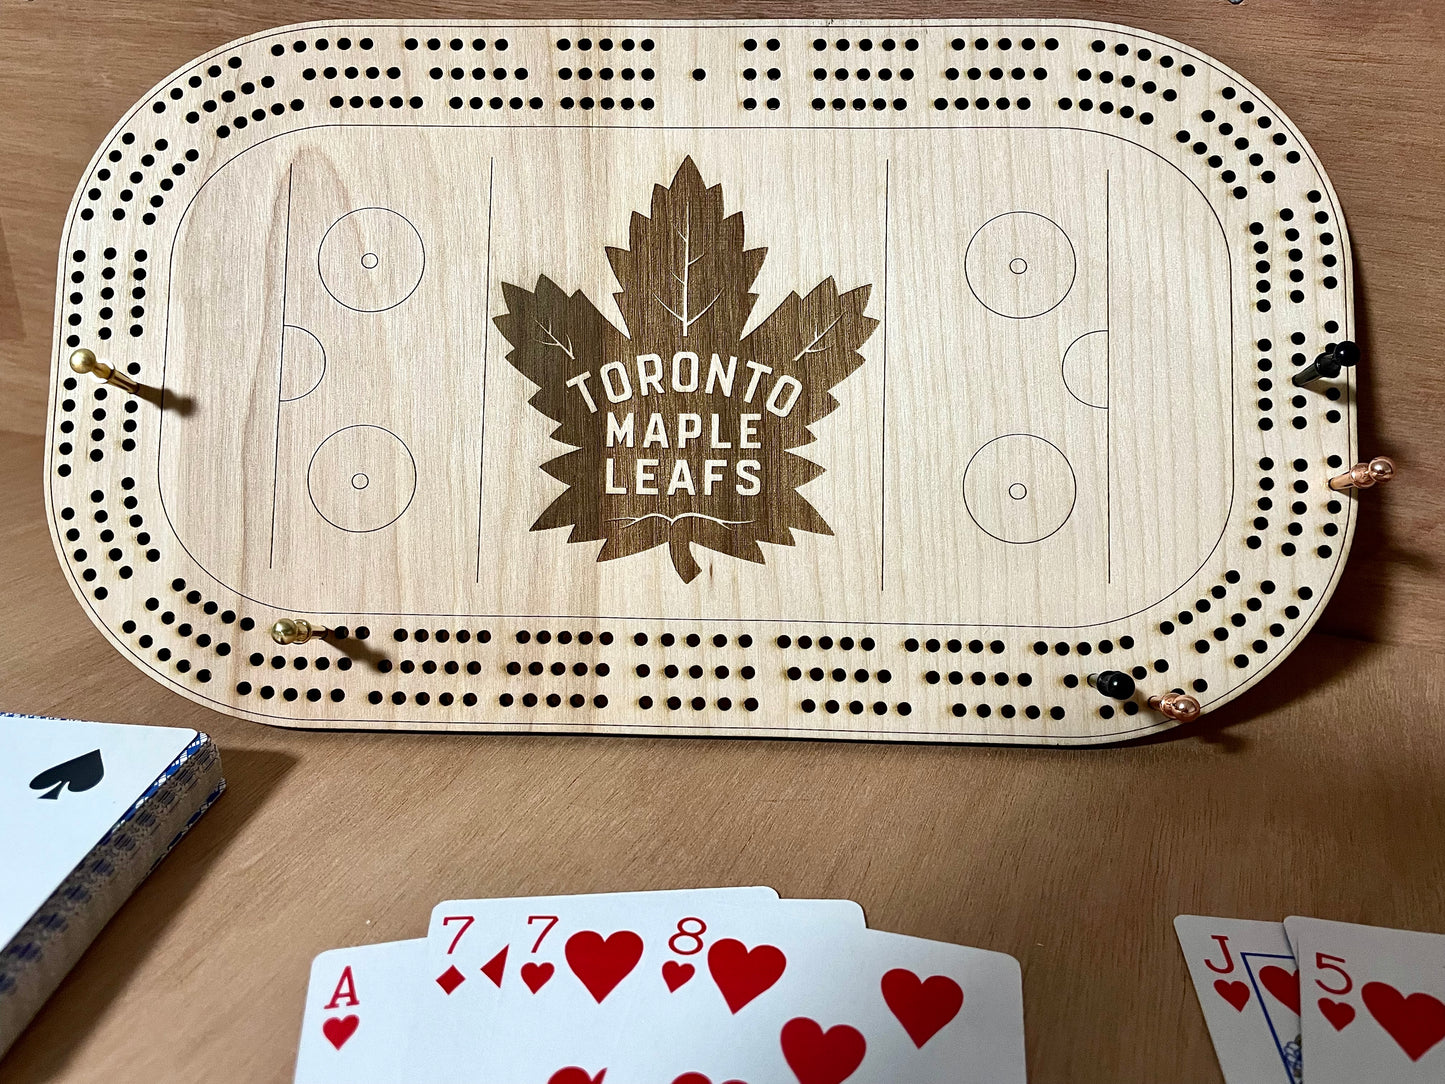 Tableau de cribbage des Maple Leafs de Toronto